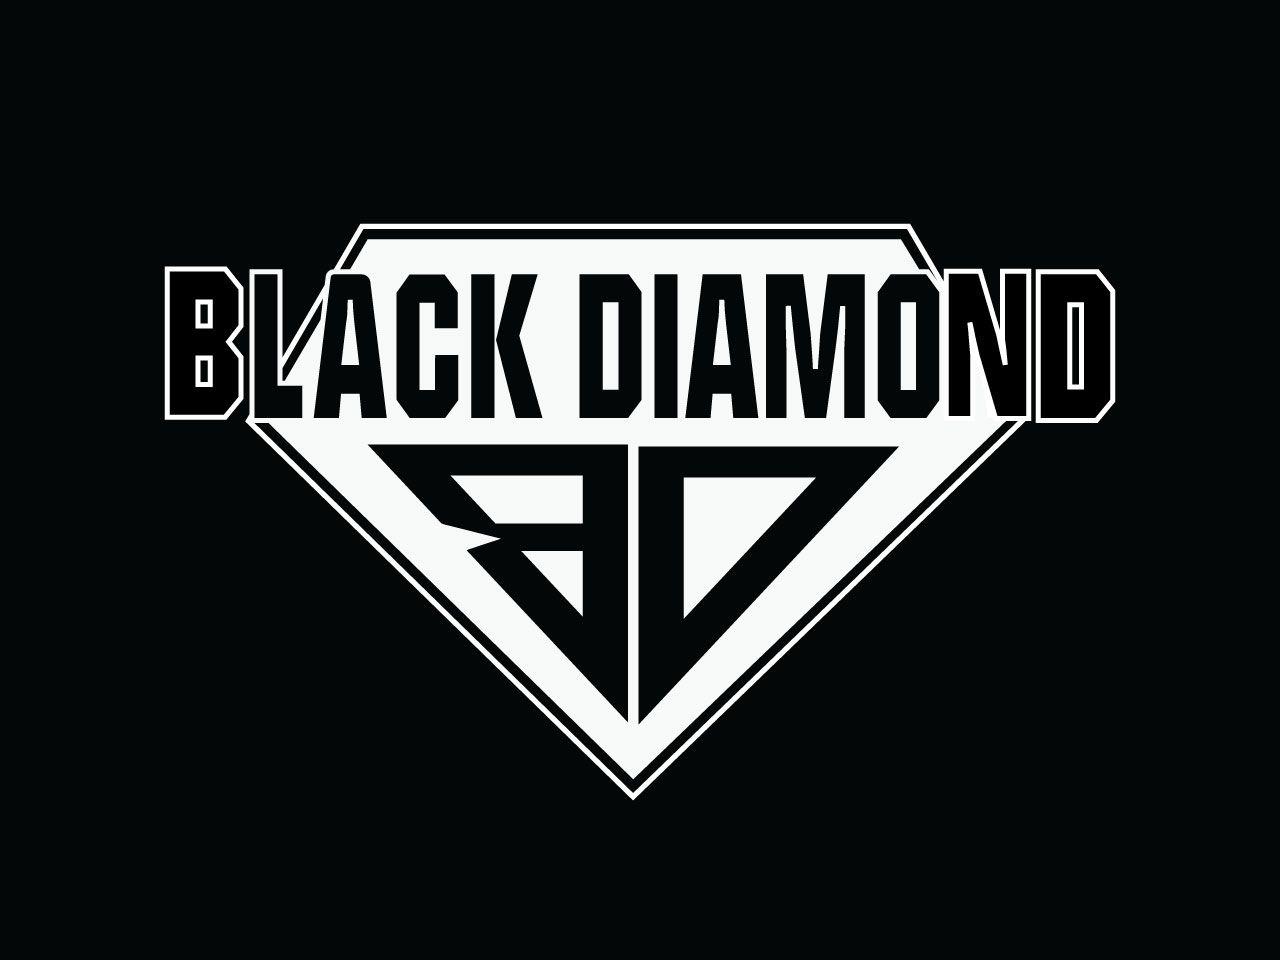 White Diamond Logo - Black Diamond clothing store logo by Afzal uz zaman Shaju | Dribbble ...